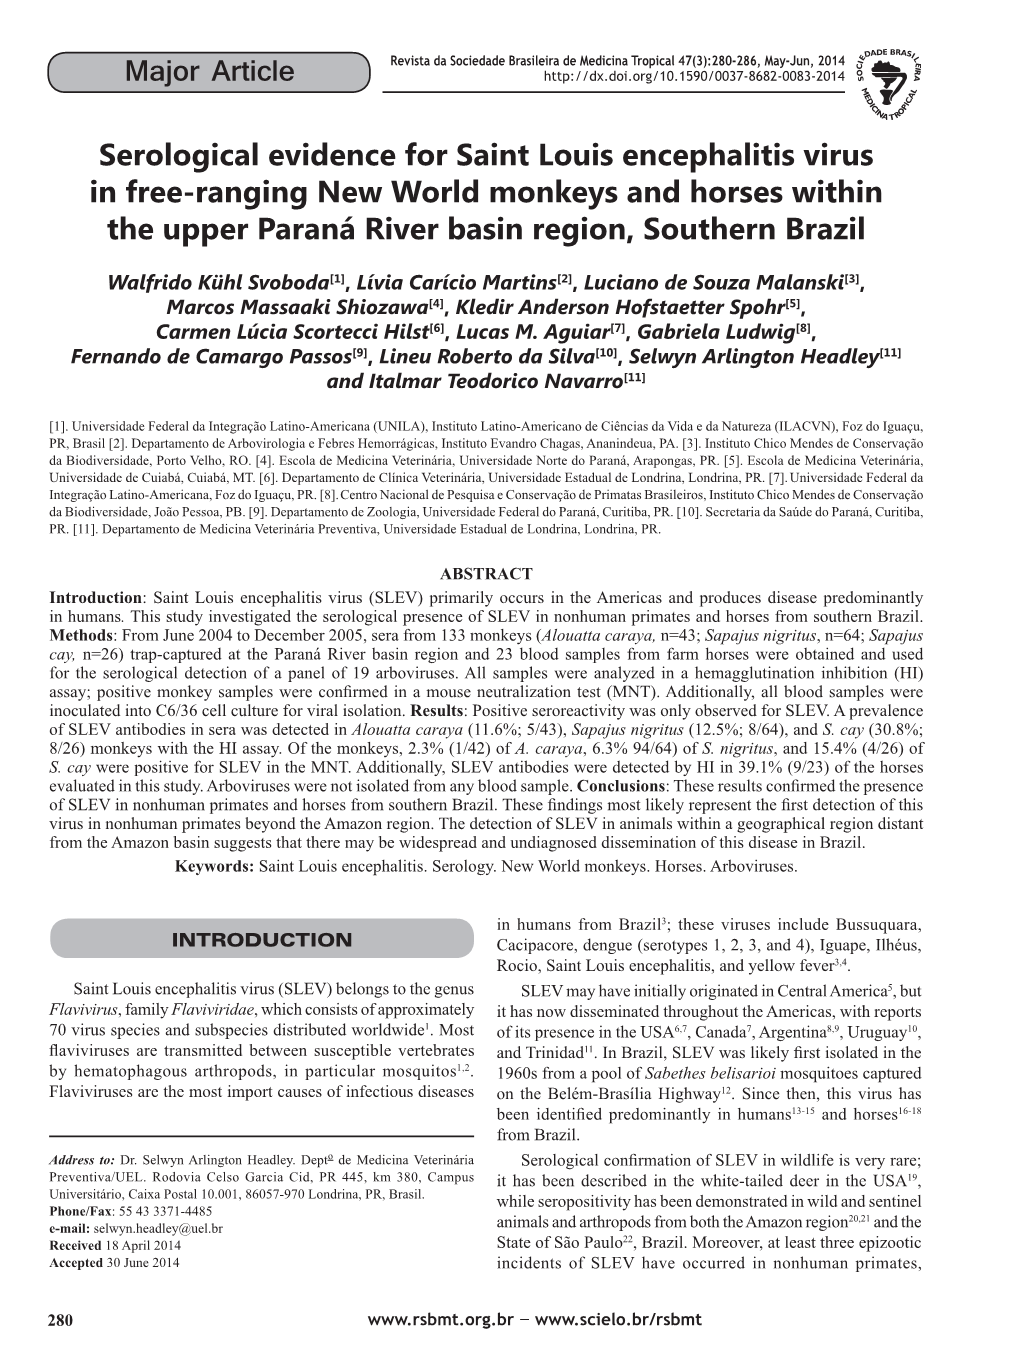 Serological Evidence for Saint Louis Encephalitis Virus in Free-Ranging New World Monkeys and Horses Within the Upper Paraná River Basin Region, Southern Brazil